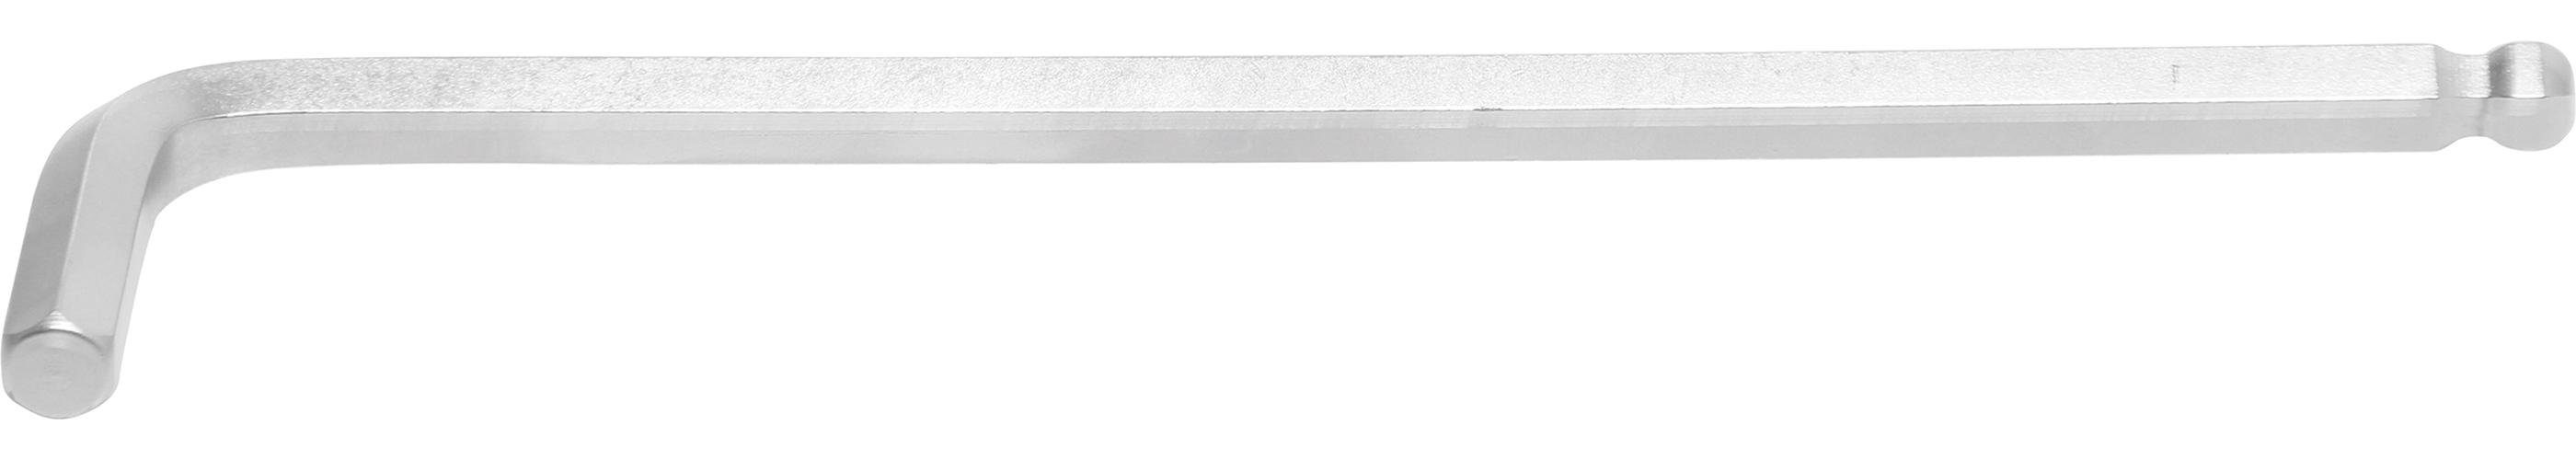 BGS technic Bit-Schraubendreher Winkelschlüssel, extra lang, Innensechskant / Innensechskant mit Kugelkopf 10 mm